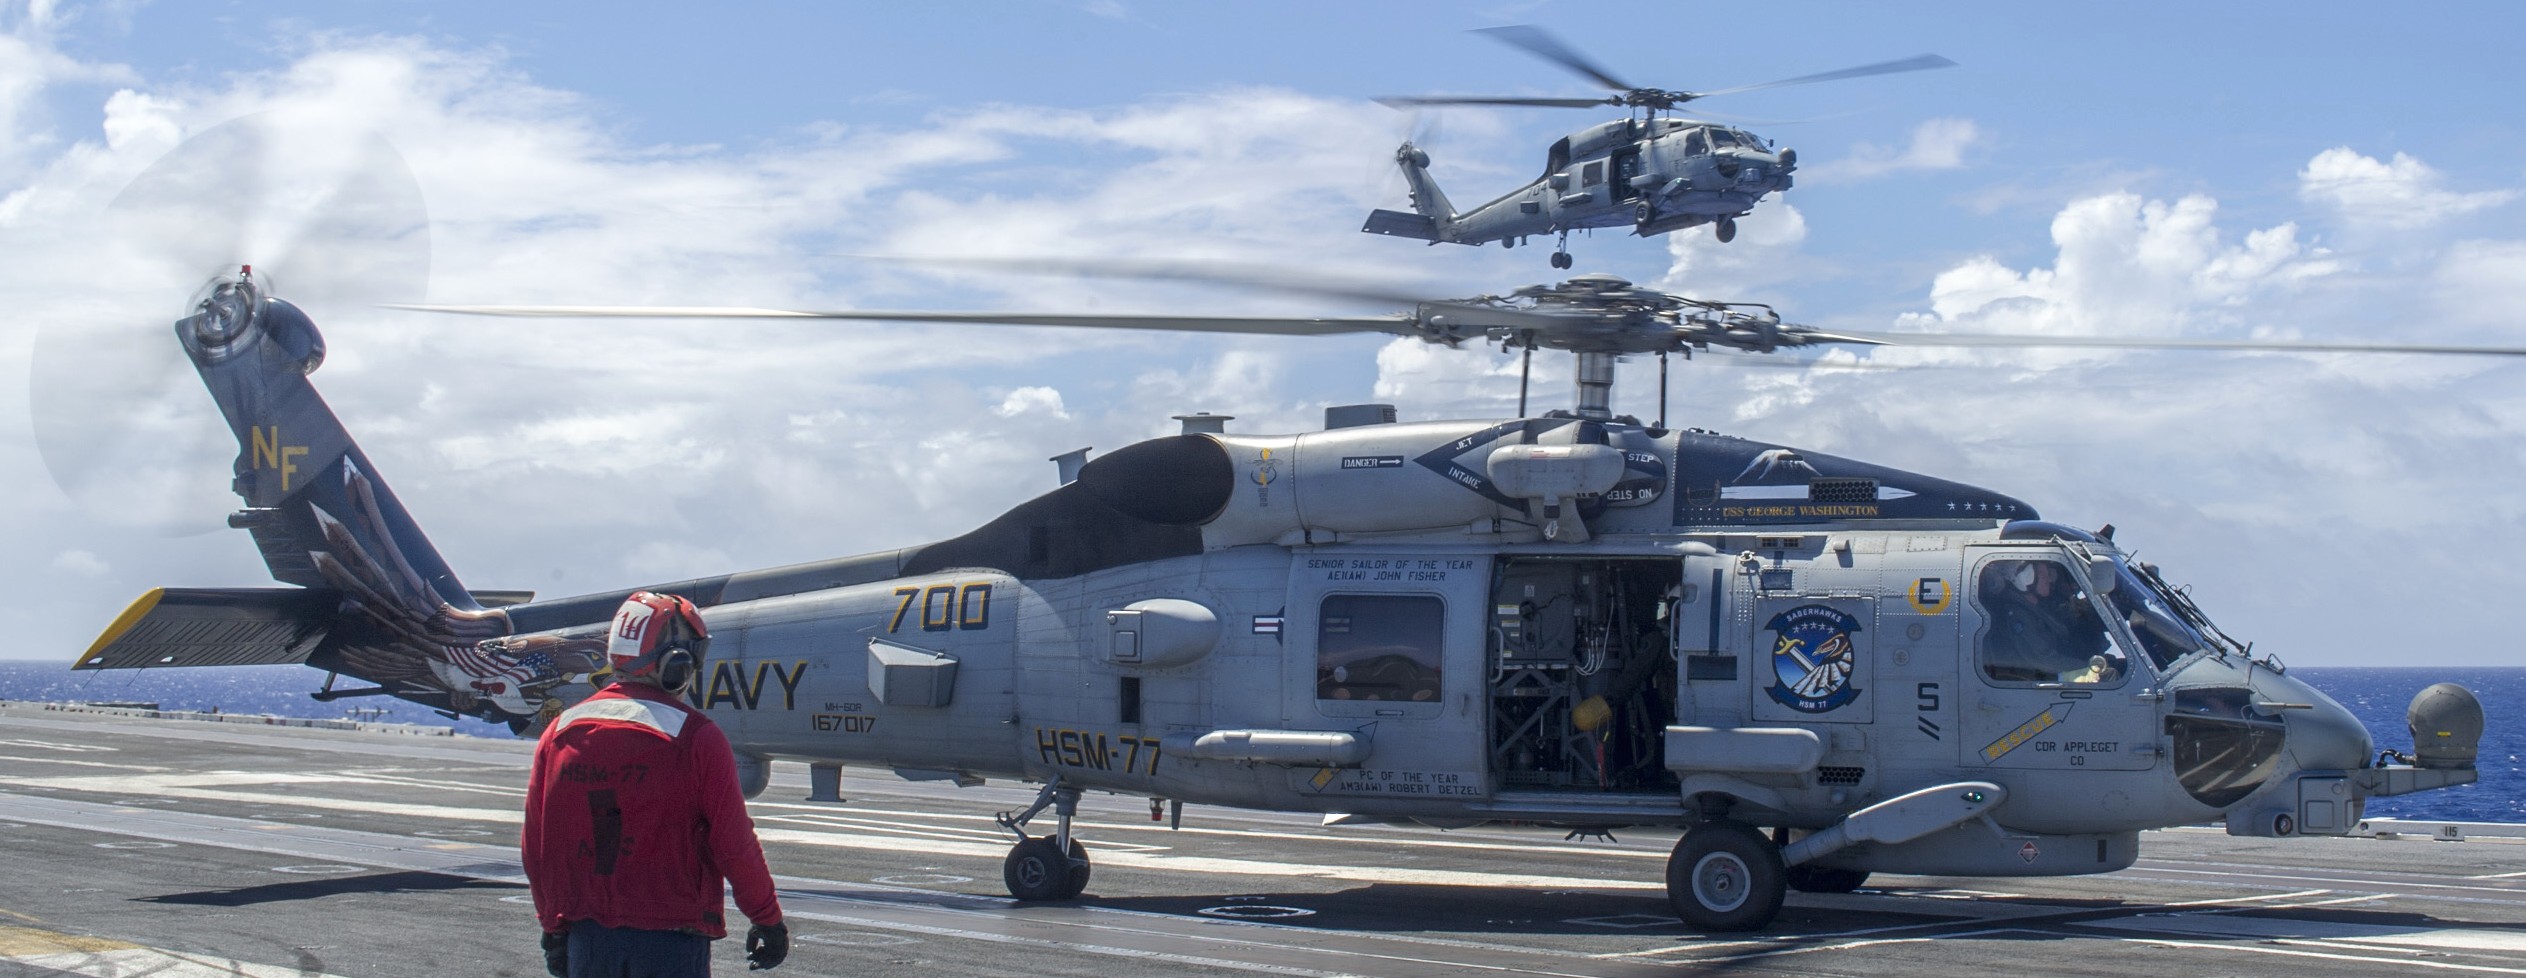 hsm-77 saberhawks helicopter maritime strike squadron mh-60r seahawk cvw-5 cvn-73 uss george washington 2015 16